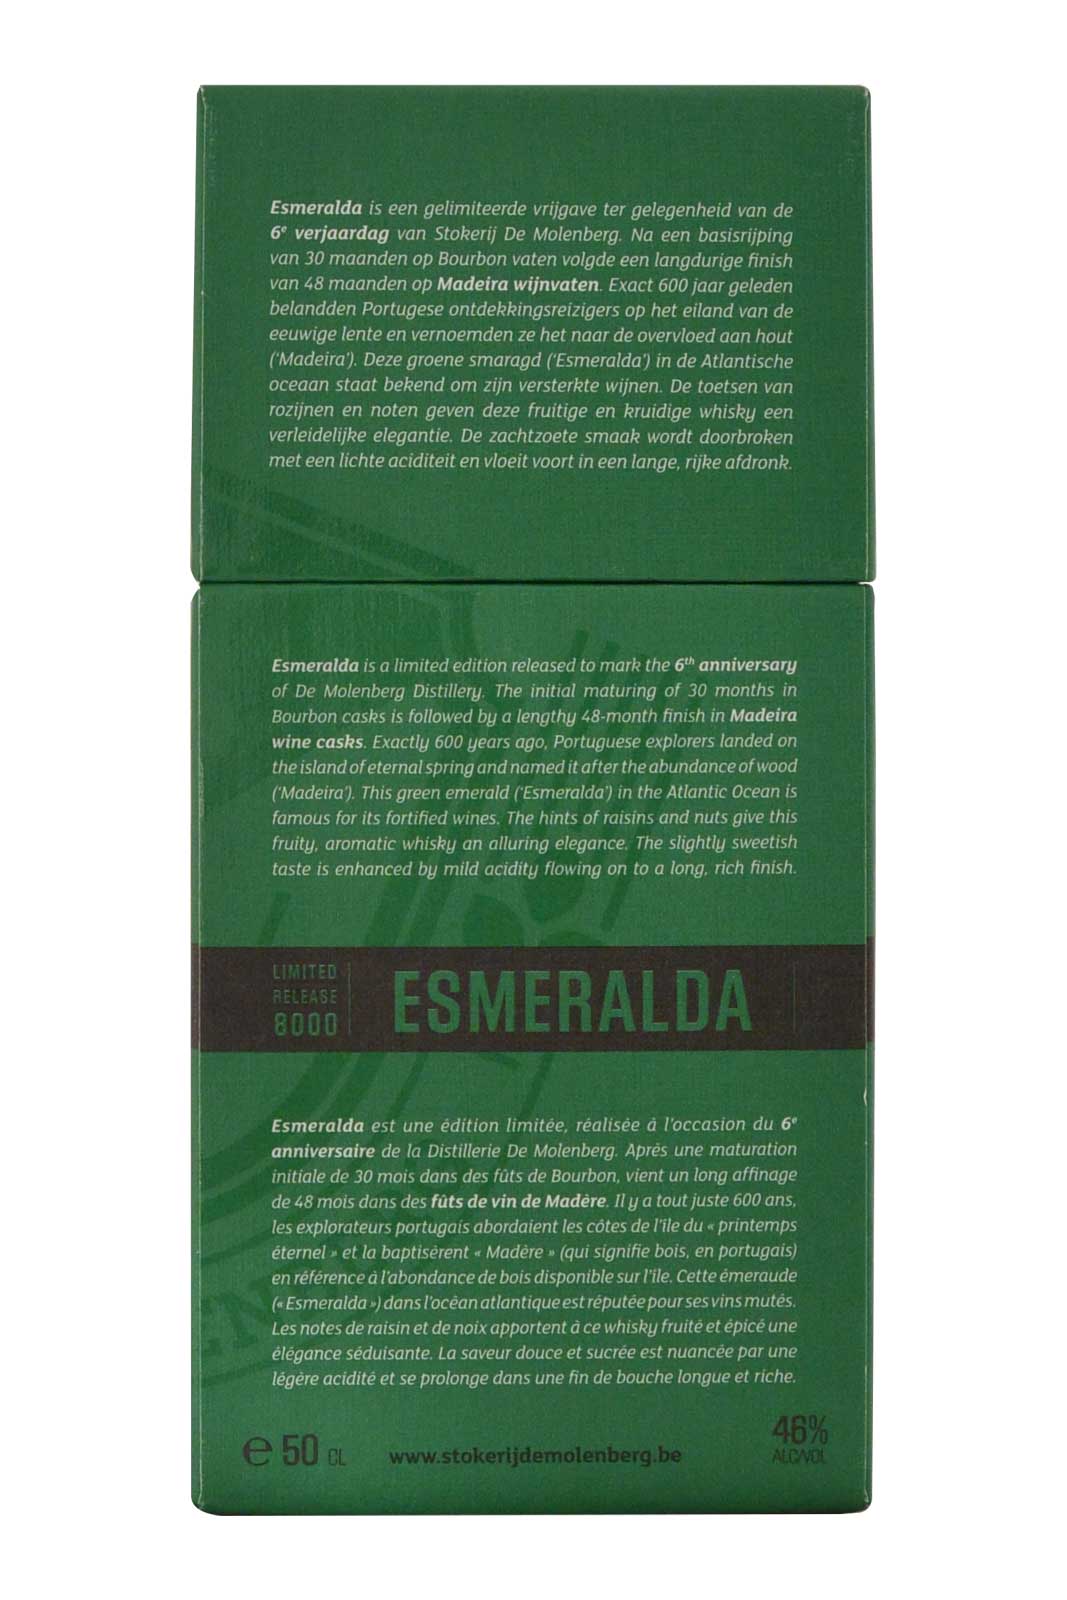 Molenberg whisky 2019 Esmeralda 6th anniversary